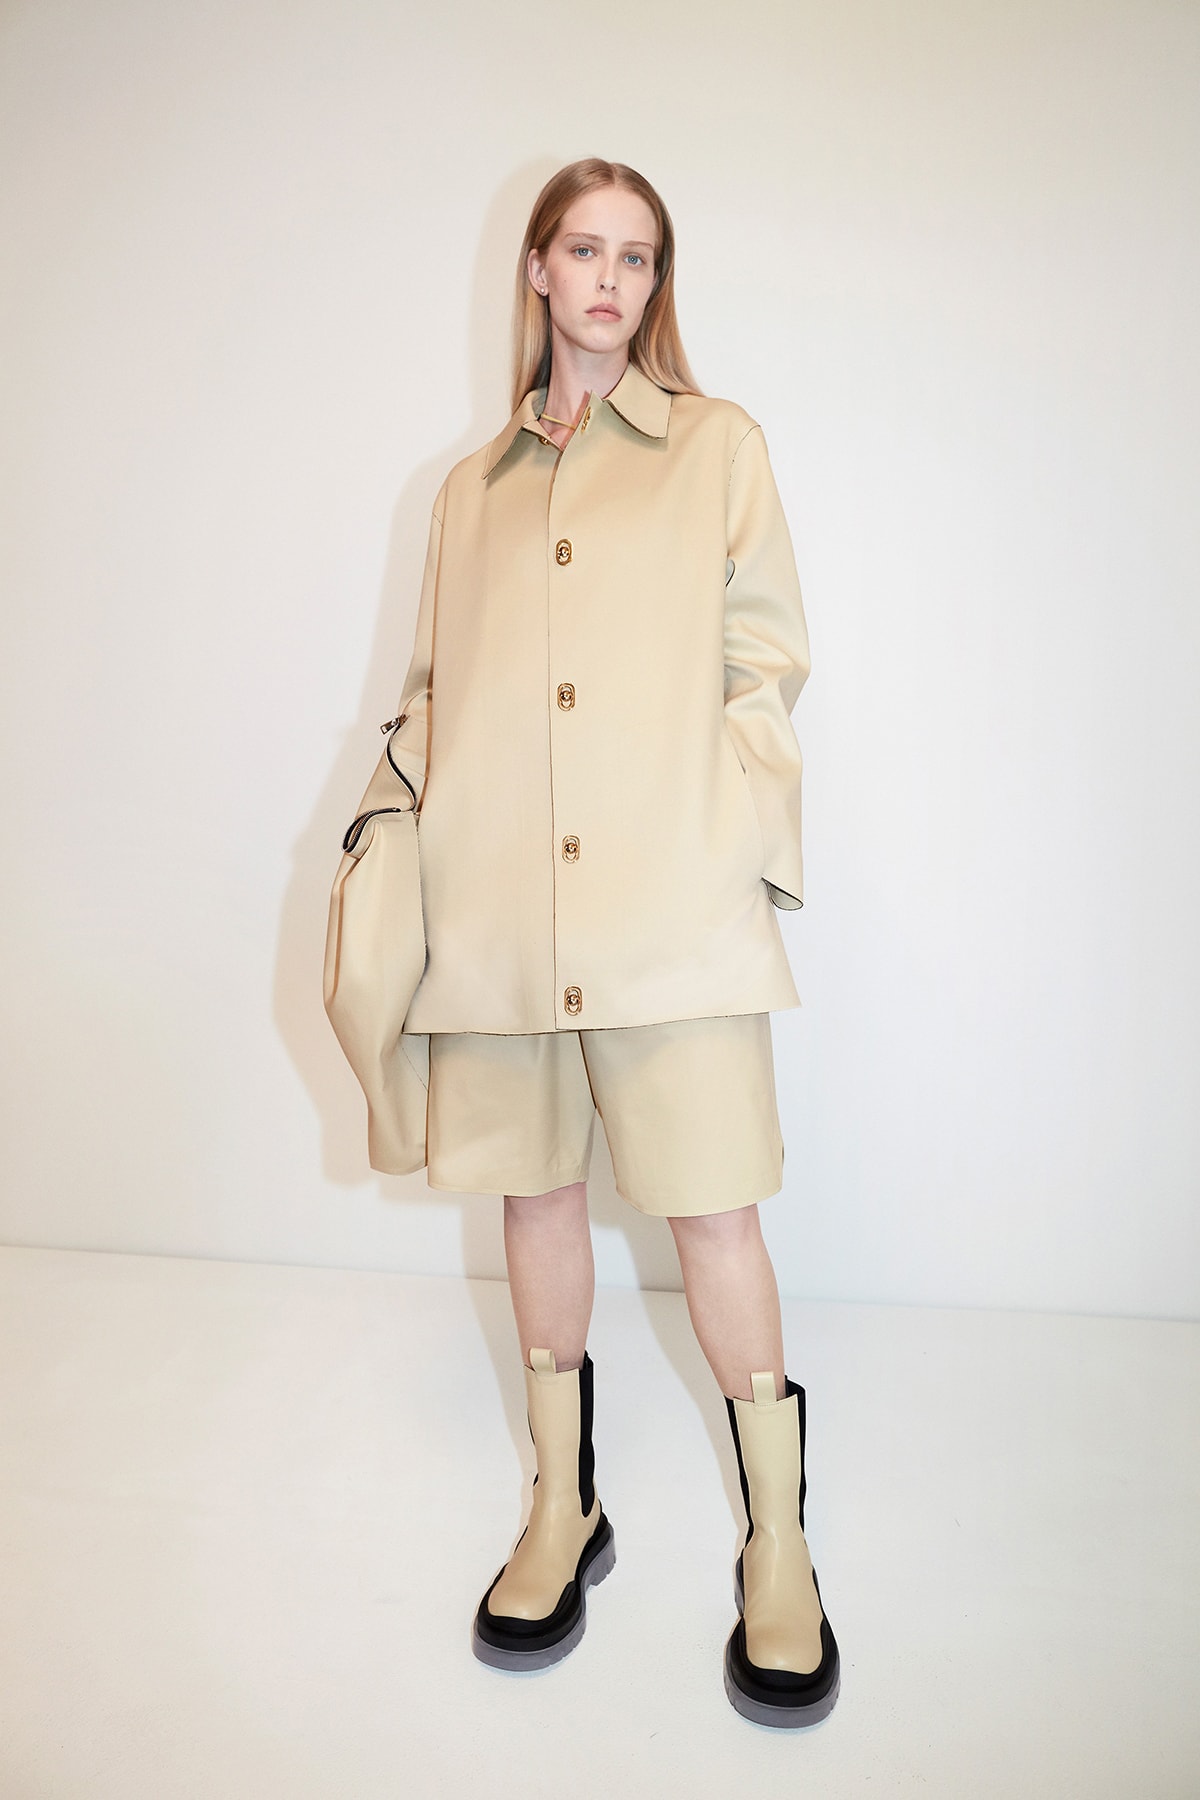 Bottega Veneta Pre-Fall 2020 Collection Lookbook Jacket Shorts Beige